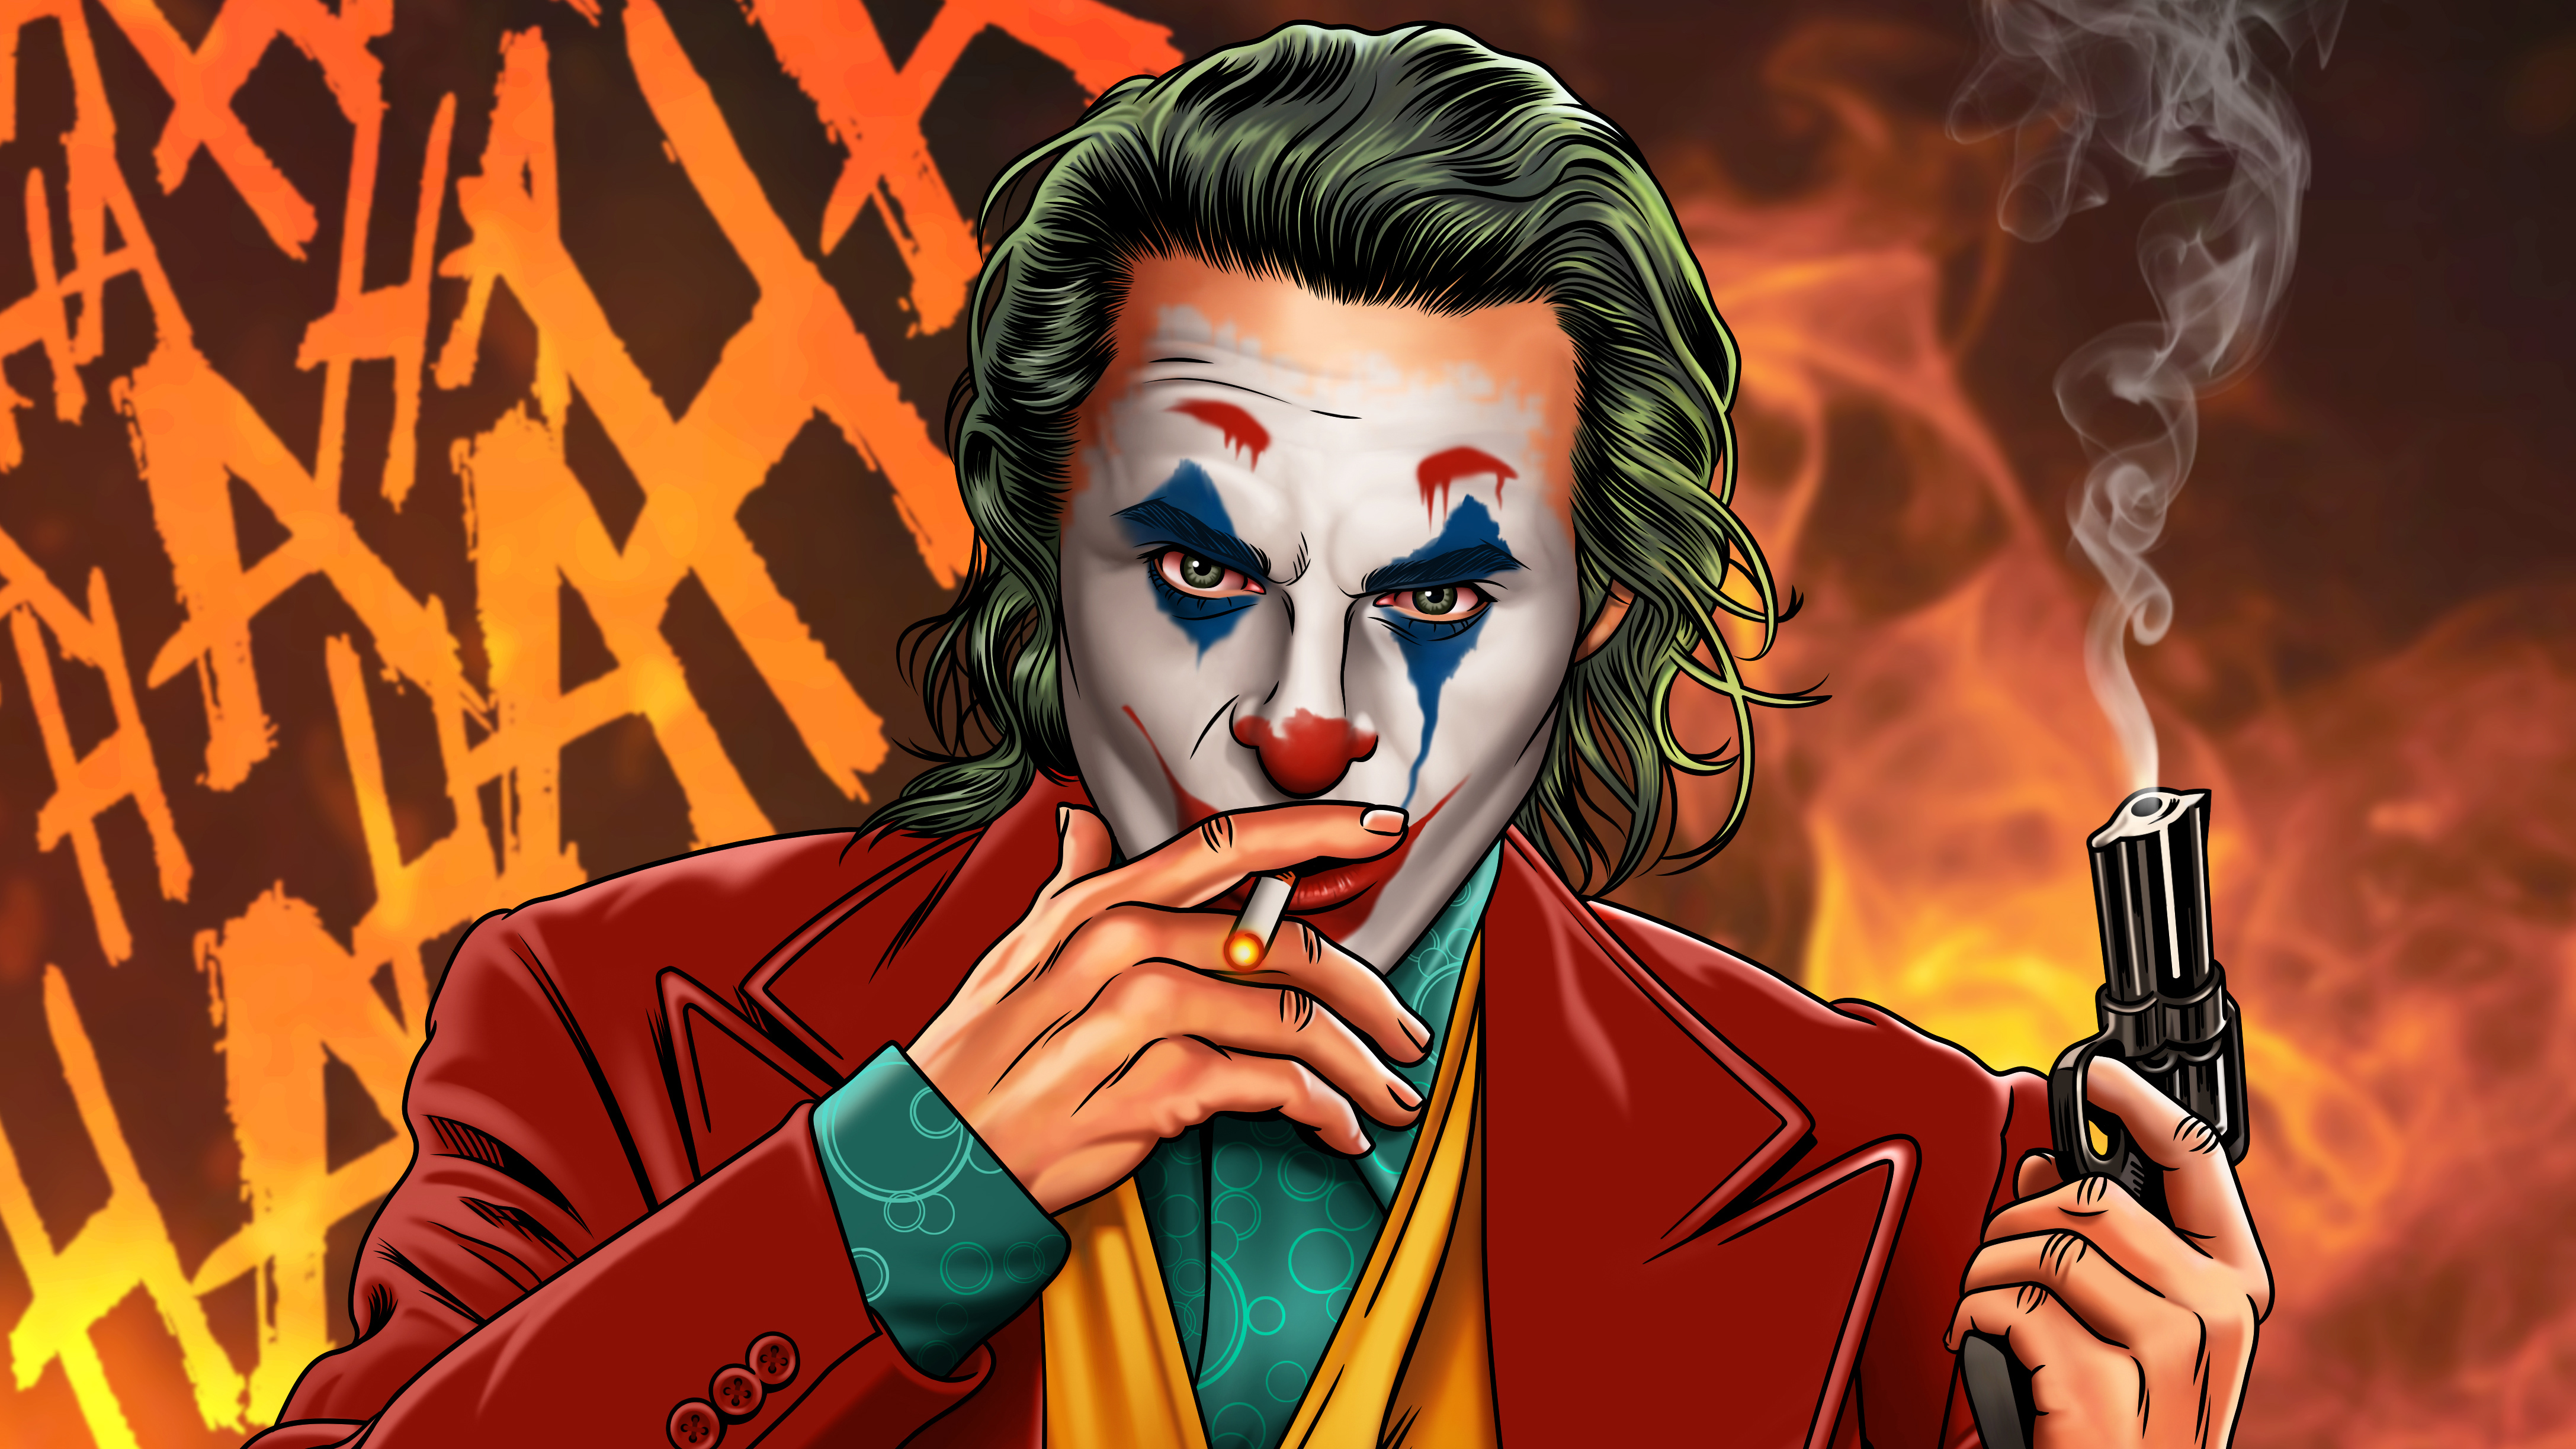 Download Dc Comics Comic Joker 4k Ultra Hd Wallpaper